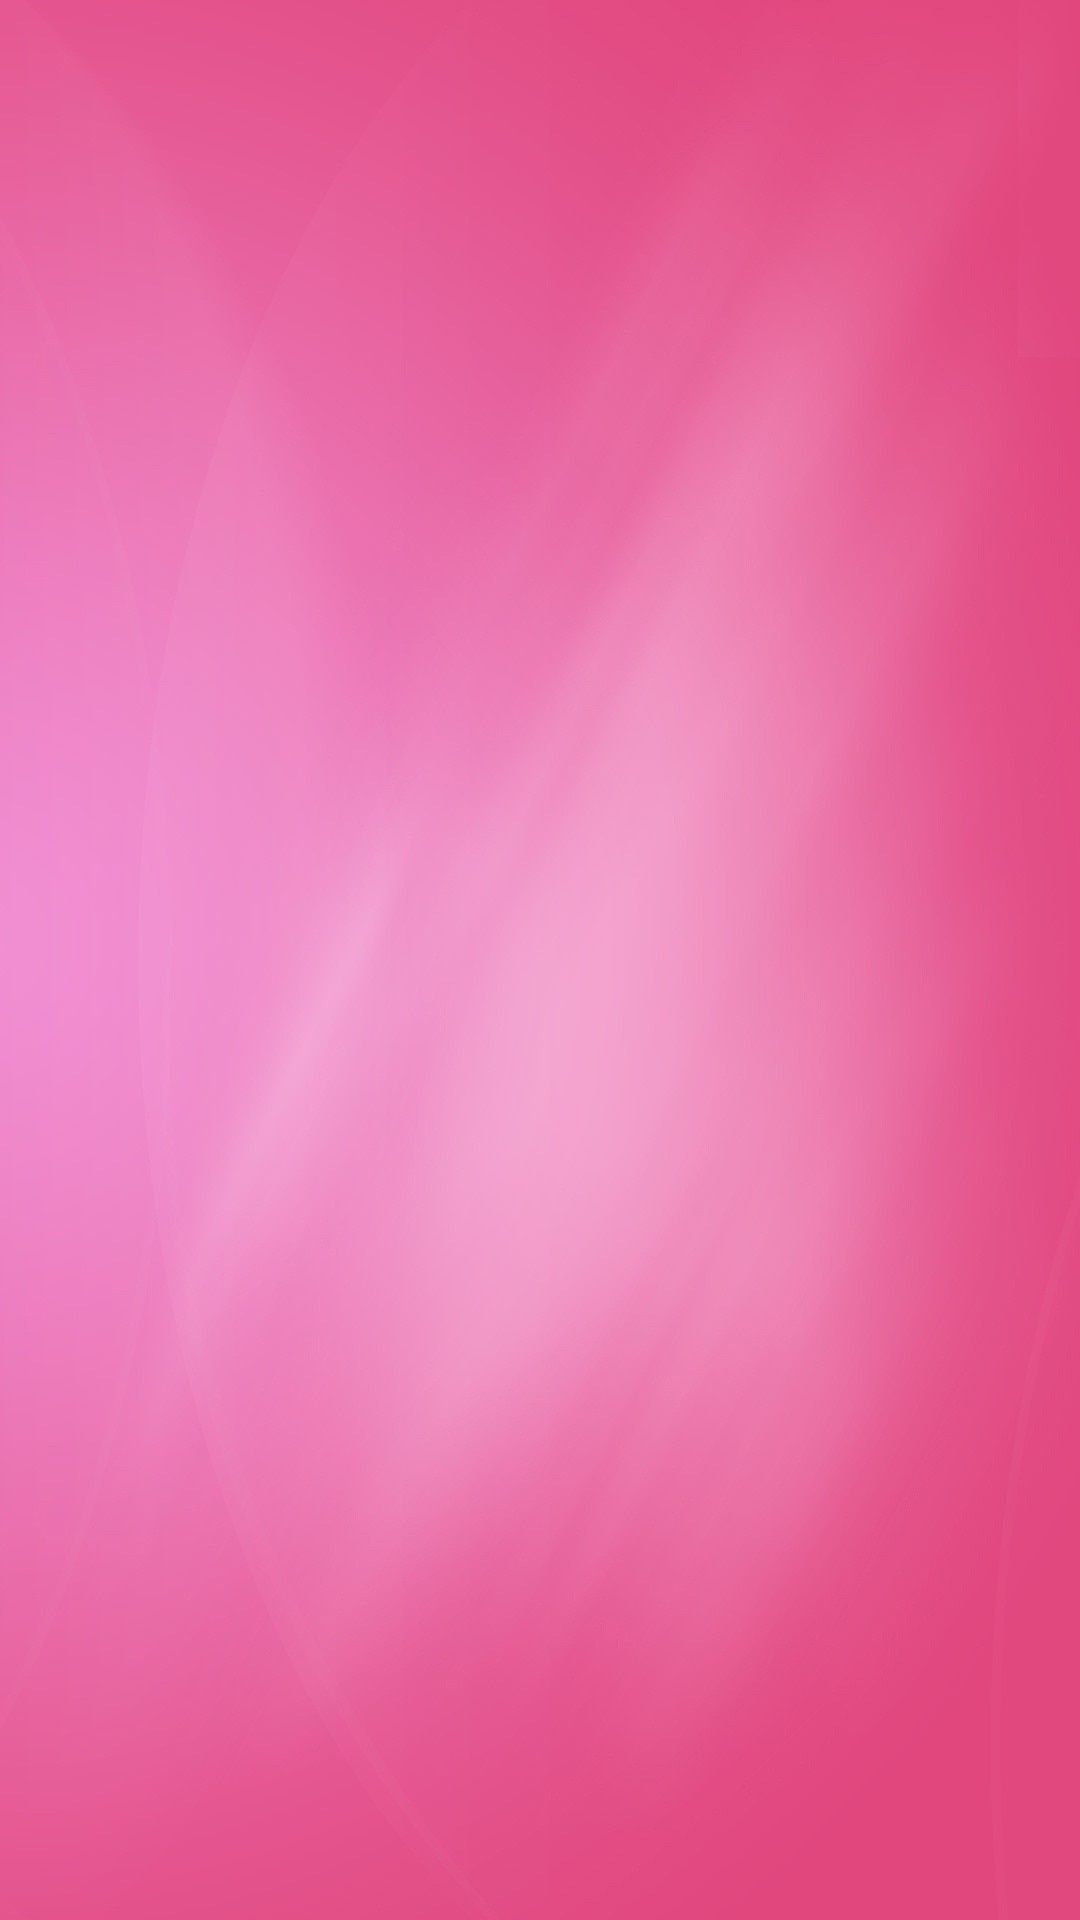 HD Pink iPhone Fondos de pantalla | 2019 3D iPhone Fondos de pantalla